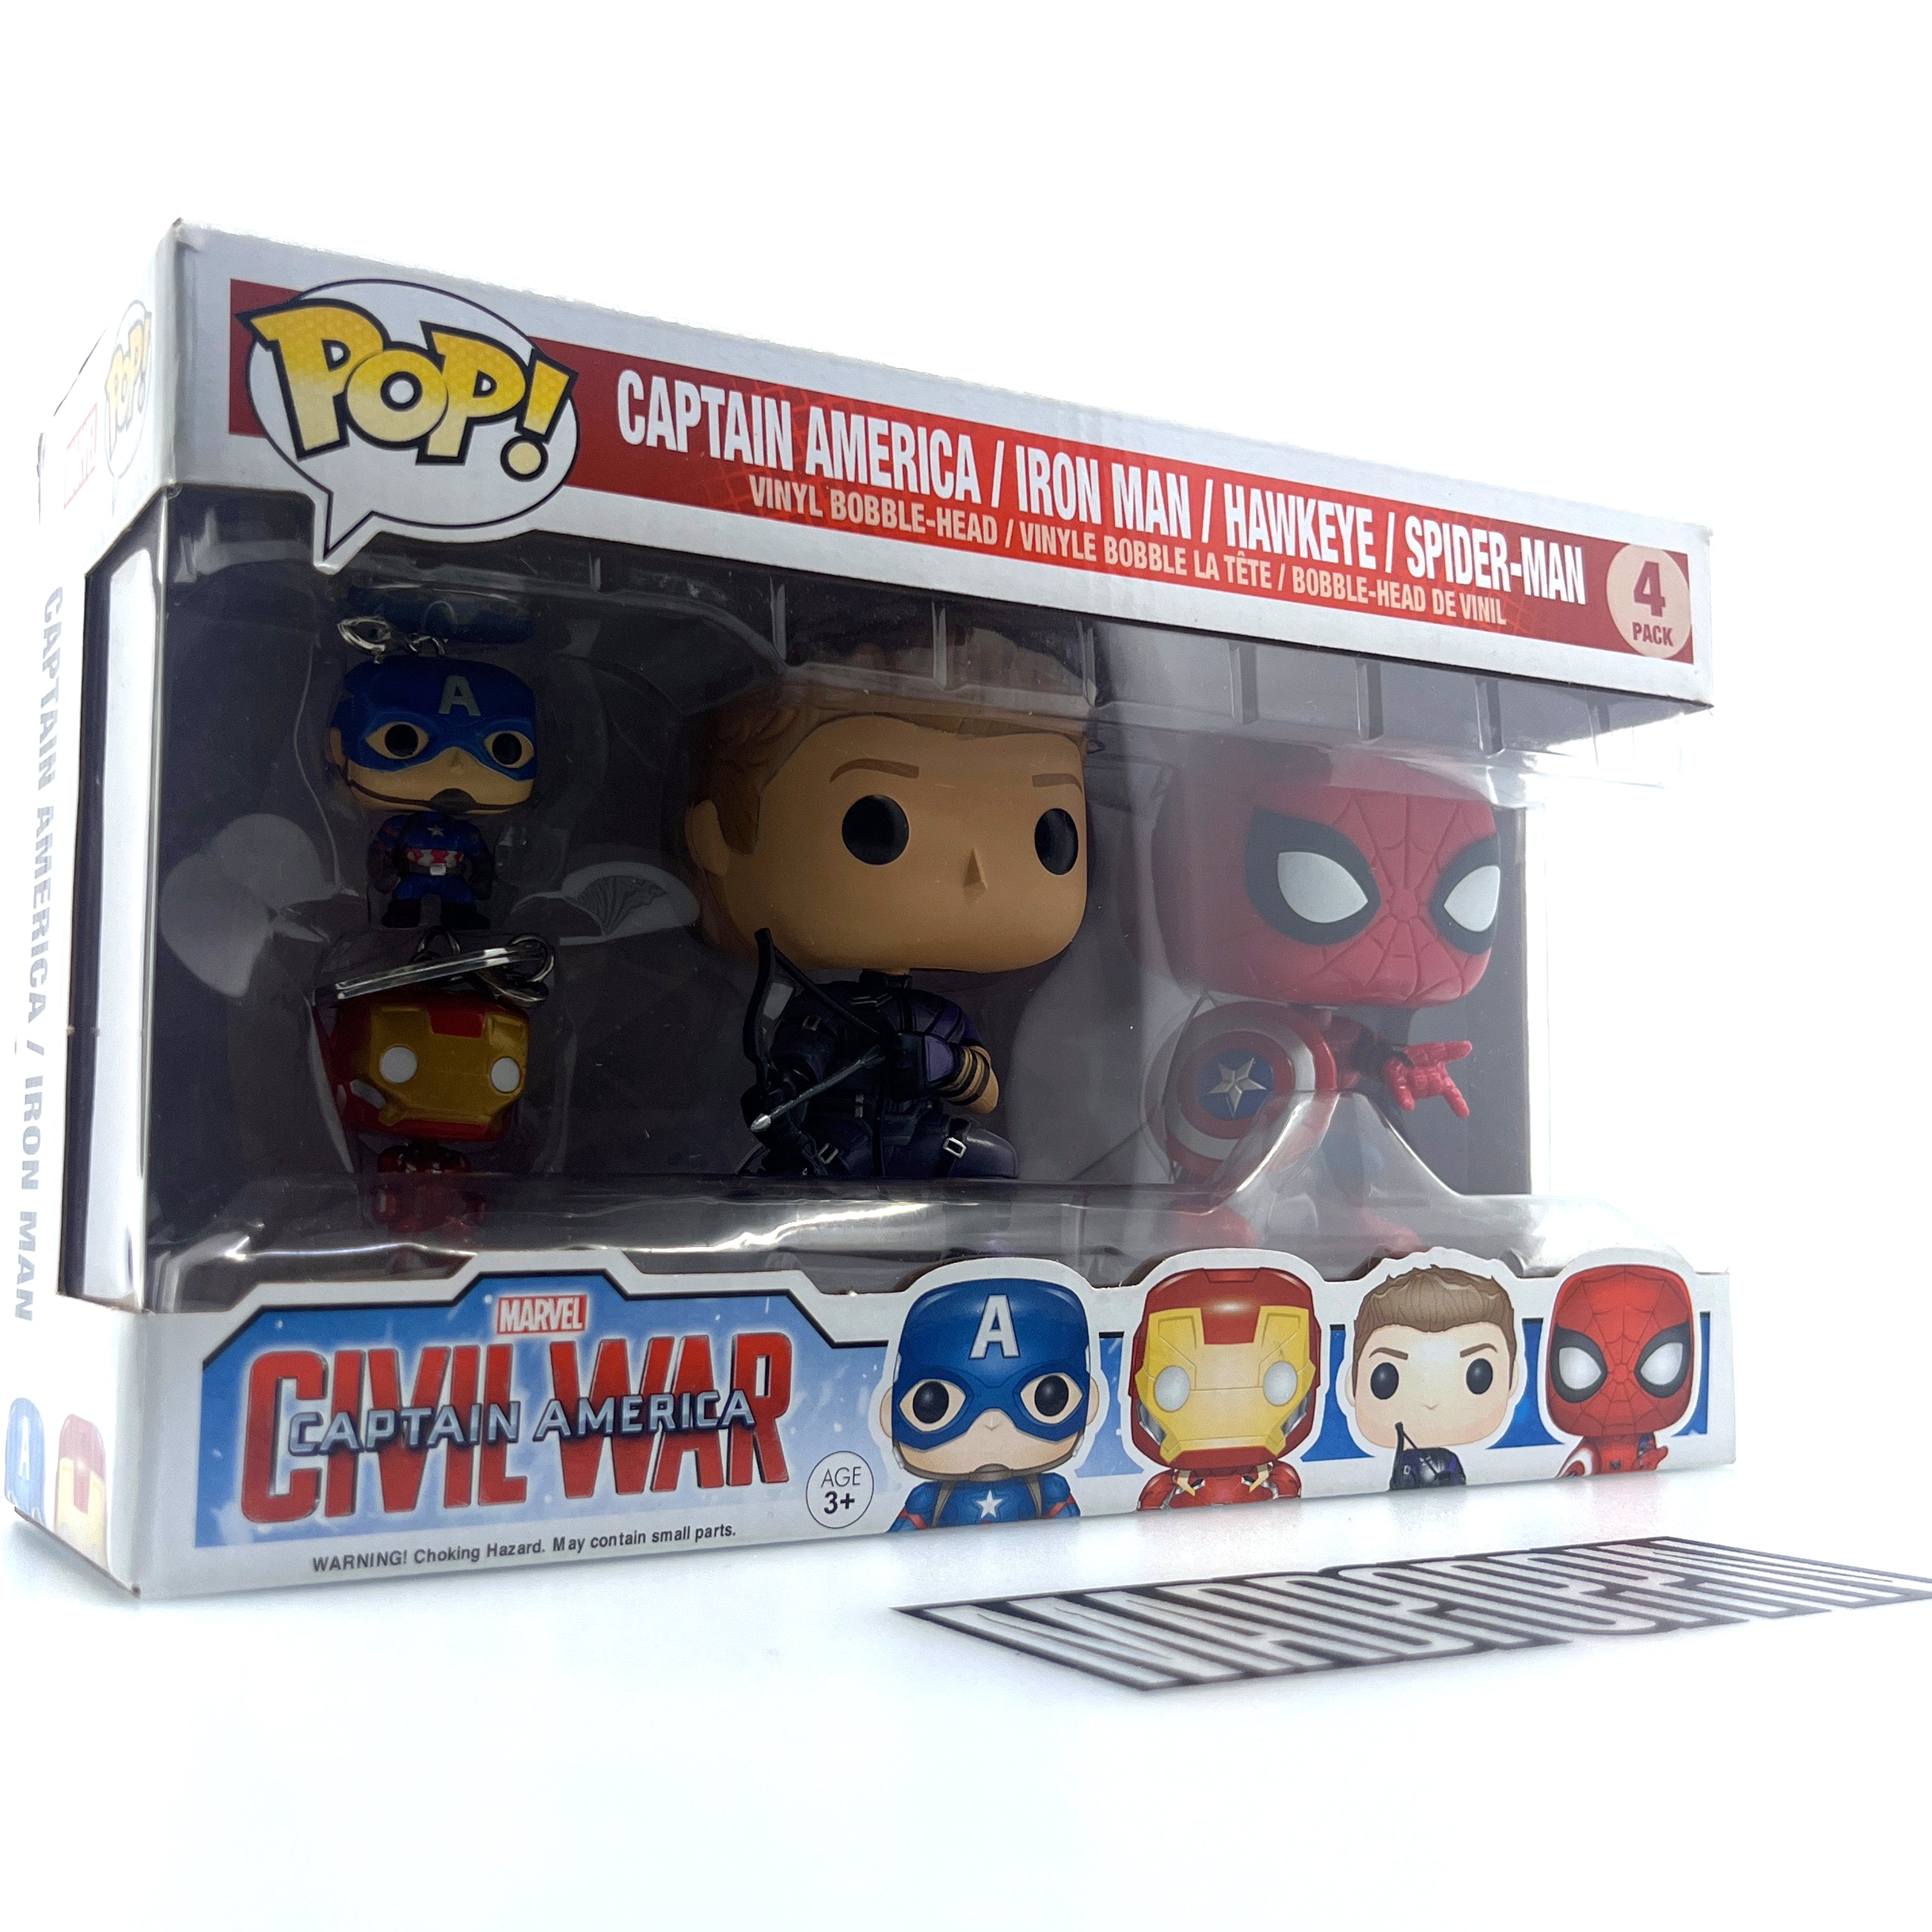 Funko Pop Marvel Civil War Captain America Iron Man Hawkeye Spider-Man 4 Pack